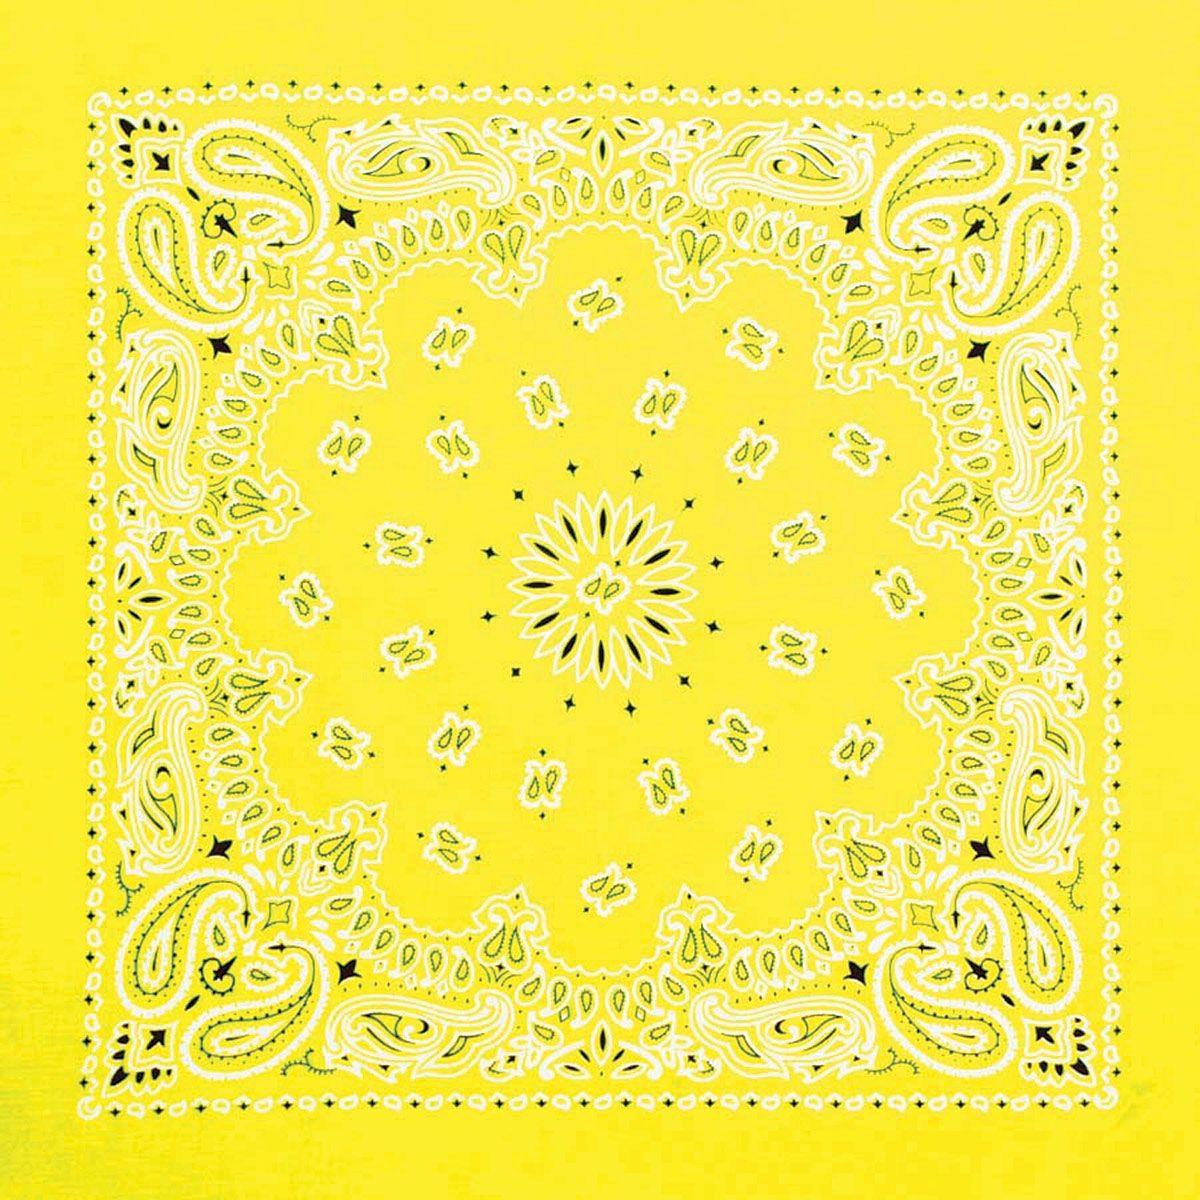 Hav A Hank Novelty Bandana Yellow Paisley, 22 W X 22 L. BLICK Art Materials. Fabric Markers, Bandana, Neon Yellow